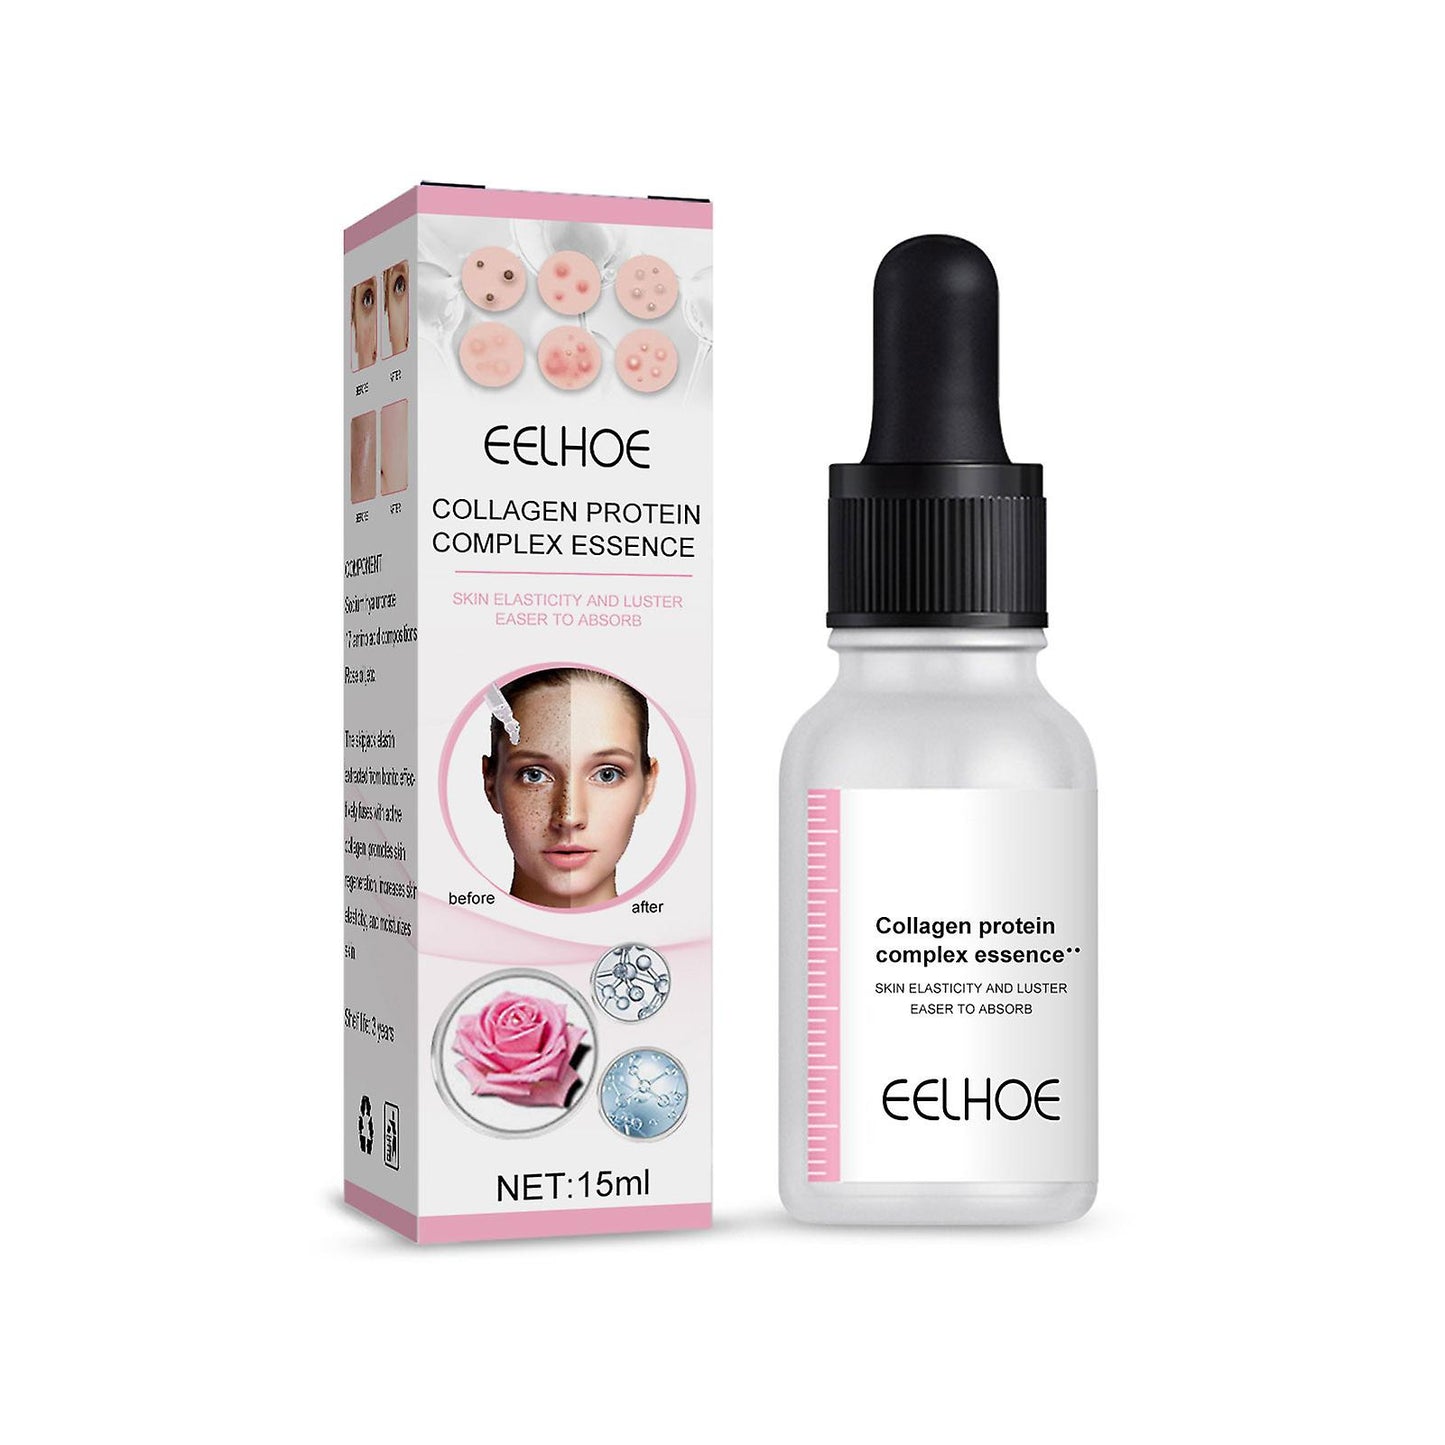 K18 Tratamiento Restaurador Intensivo para Cabello 50 ml + Serum Antiarrugas Facial Complex Essence Eelhoe